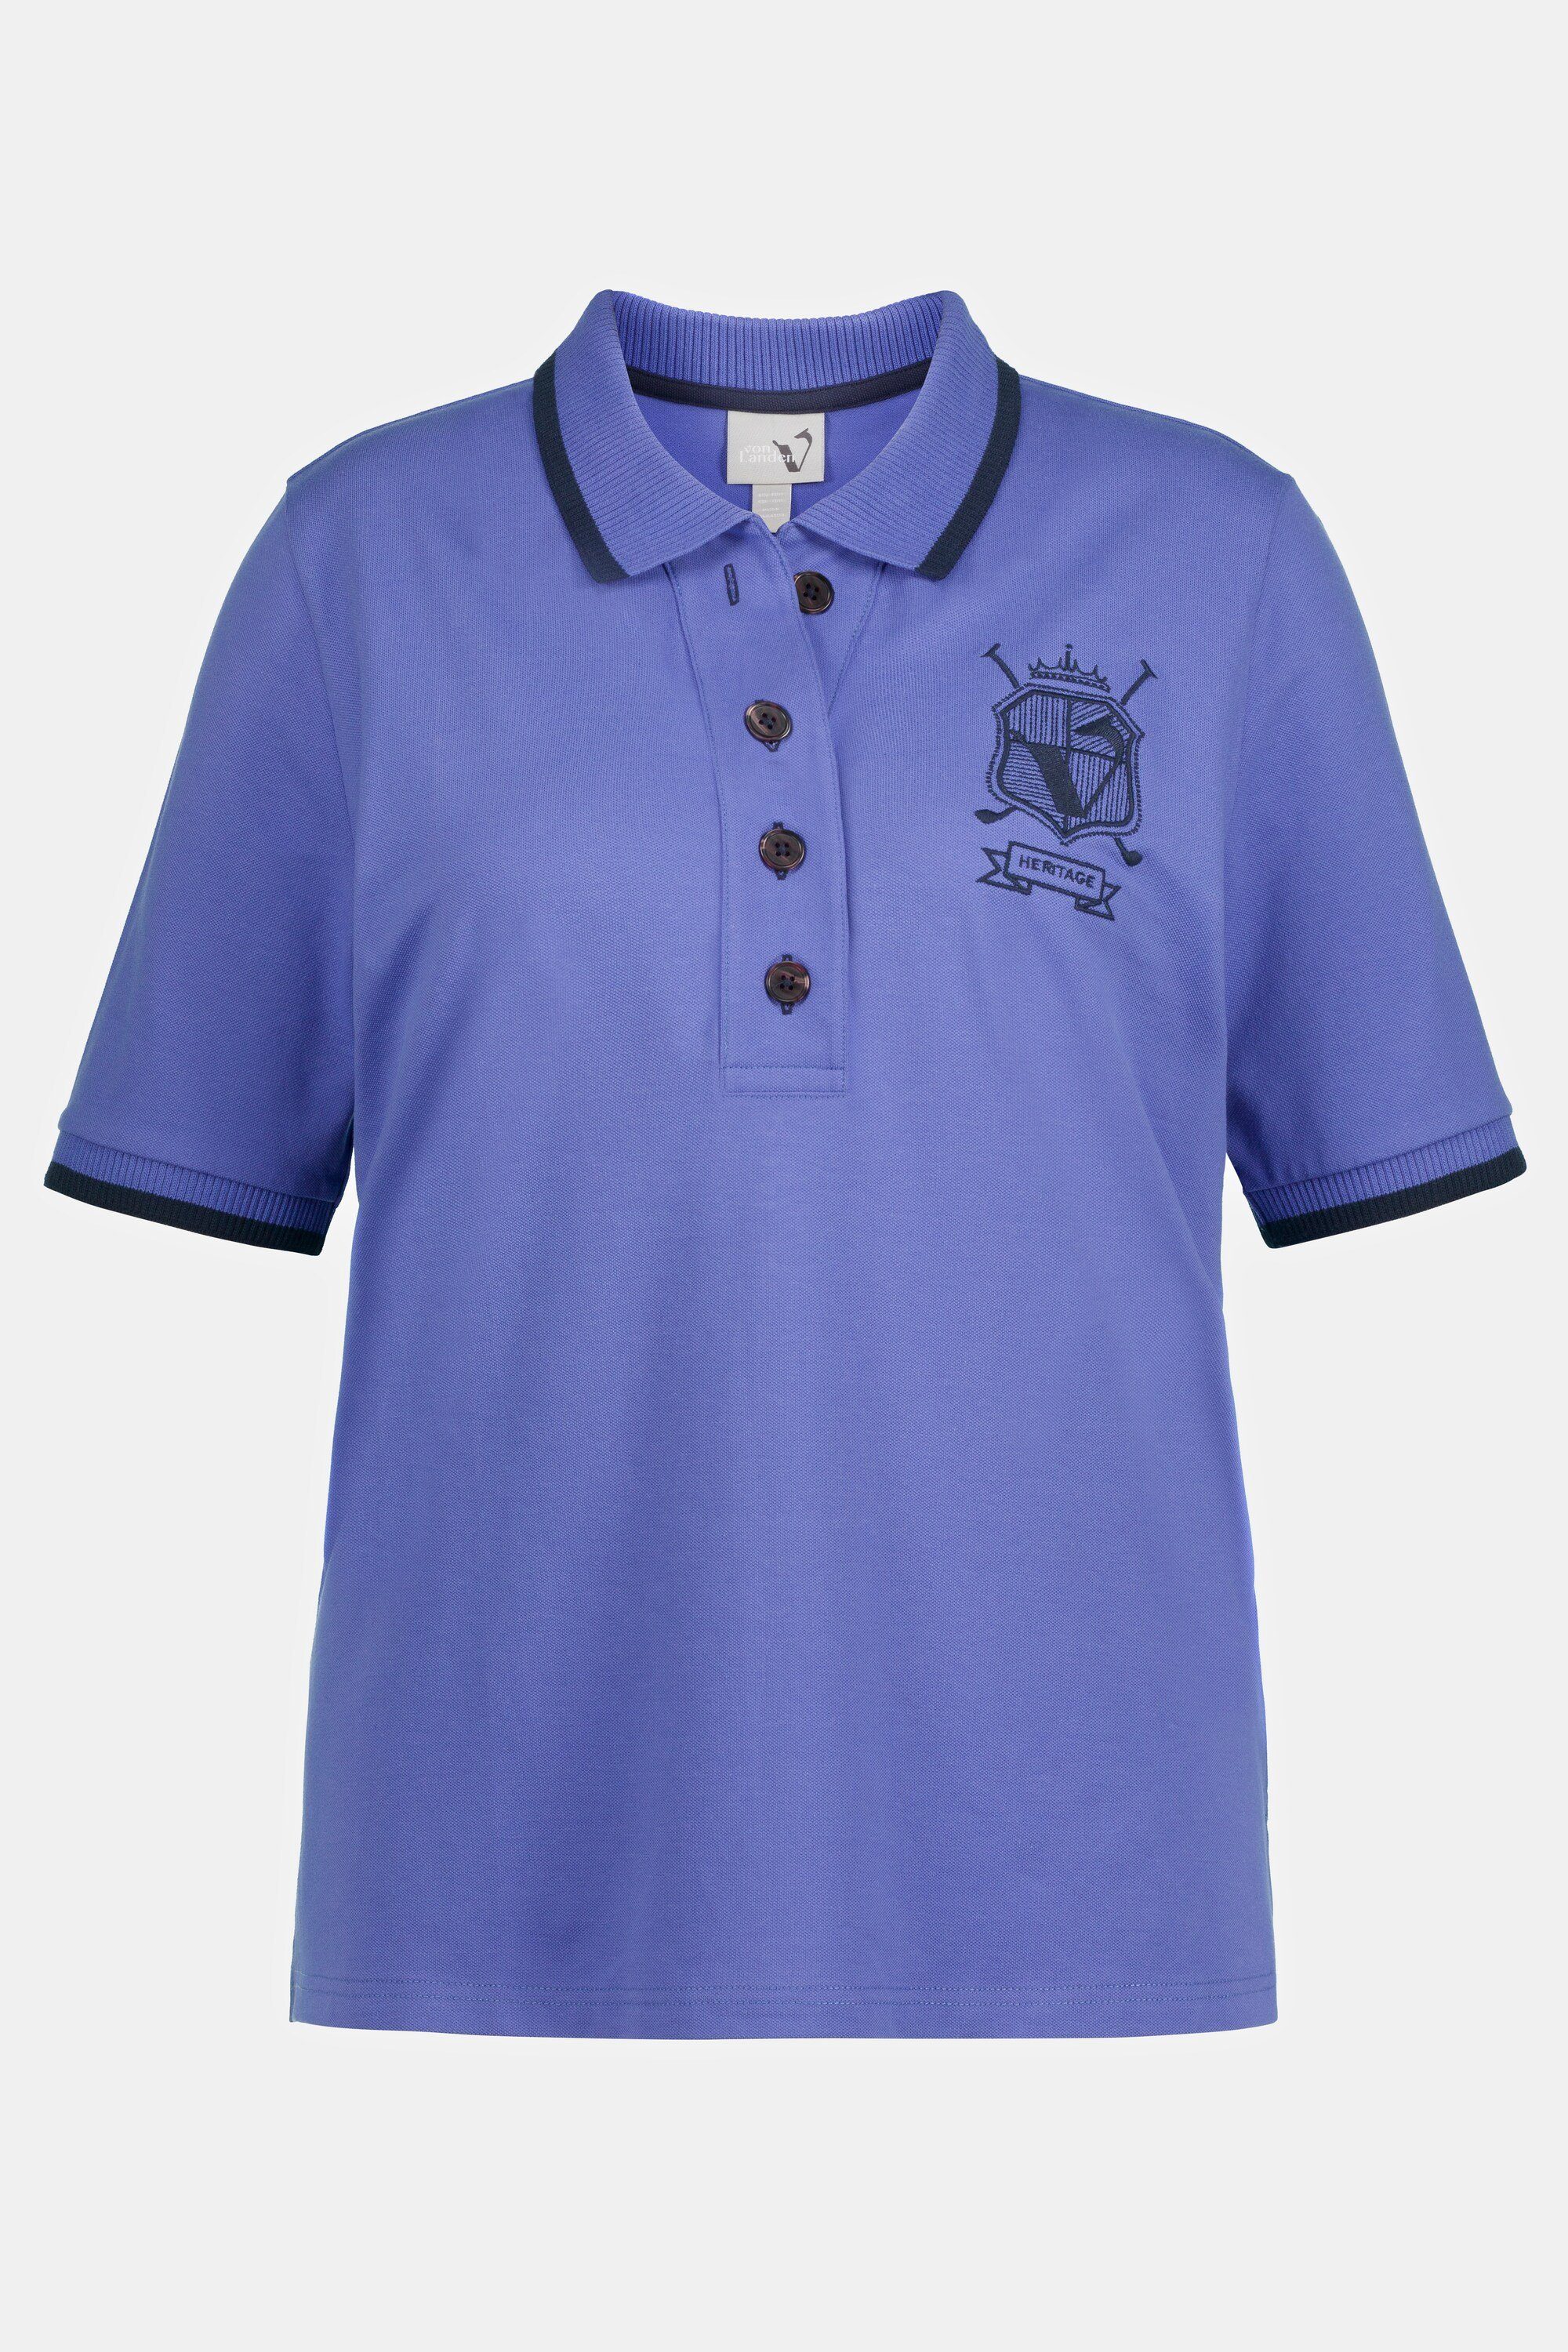 Ulla Popken Poloshirt Poloshirt blauviolett